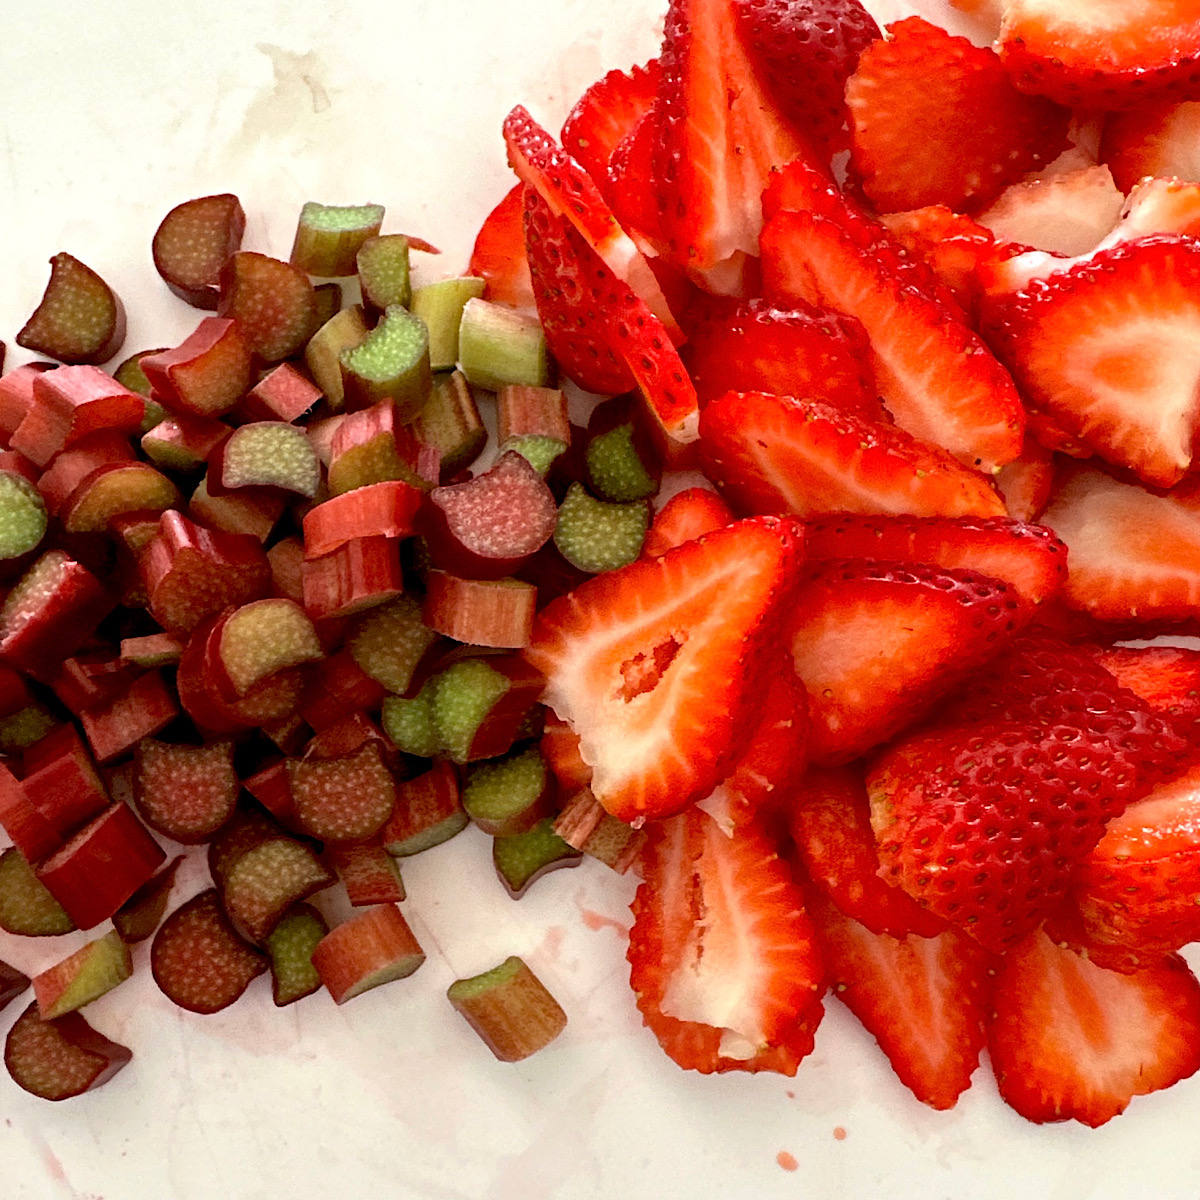 Chopped rhubarb and sliced strawberries on white cutting board.